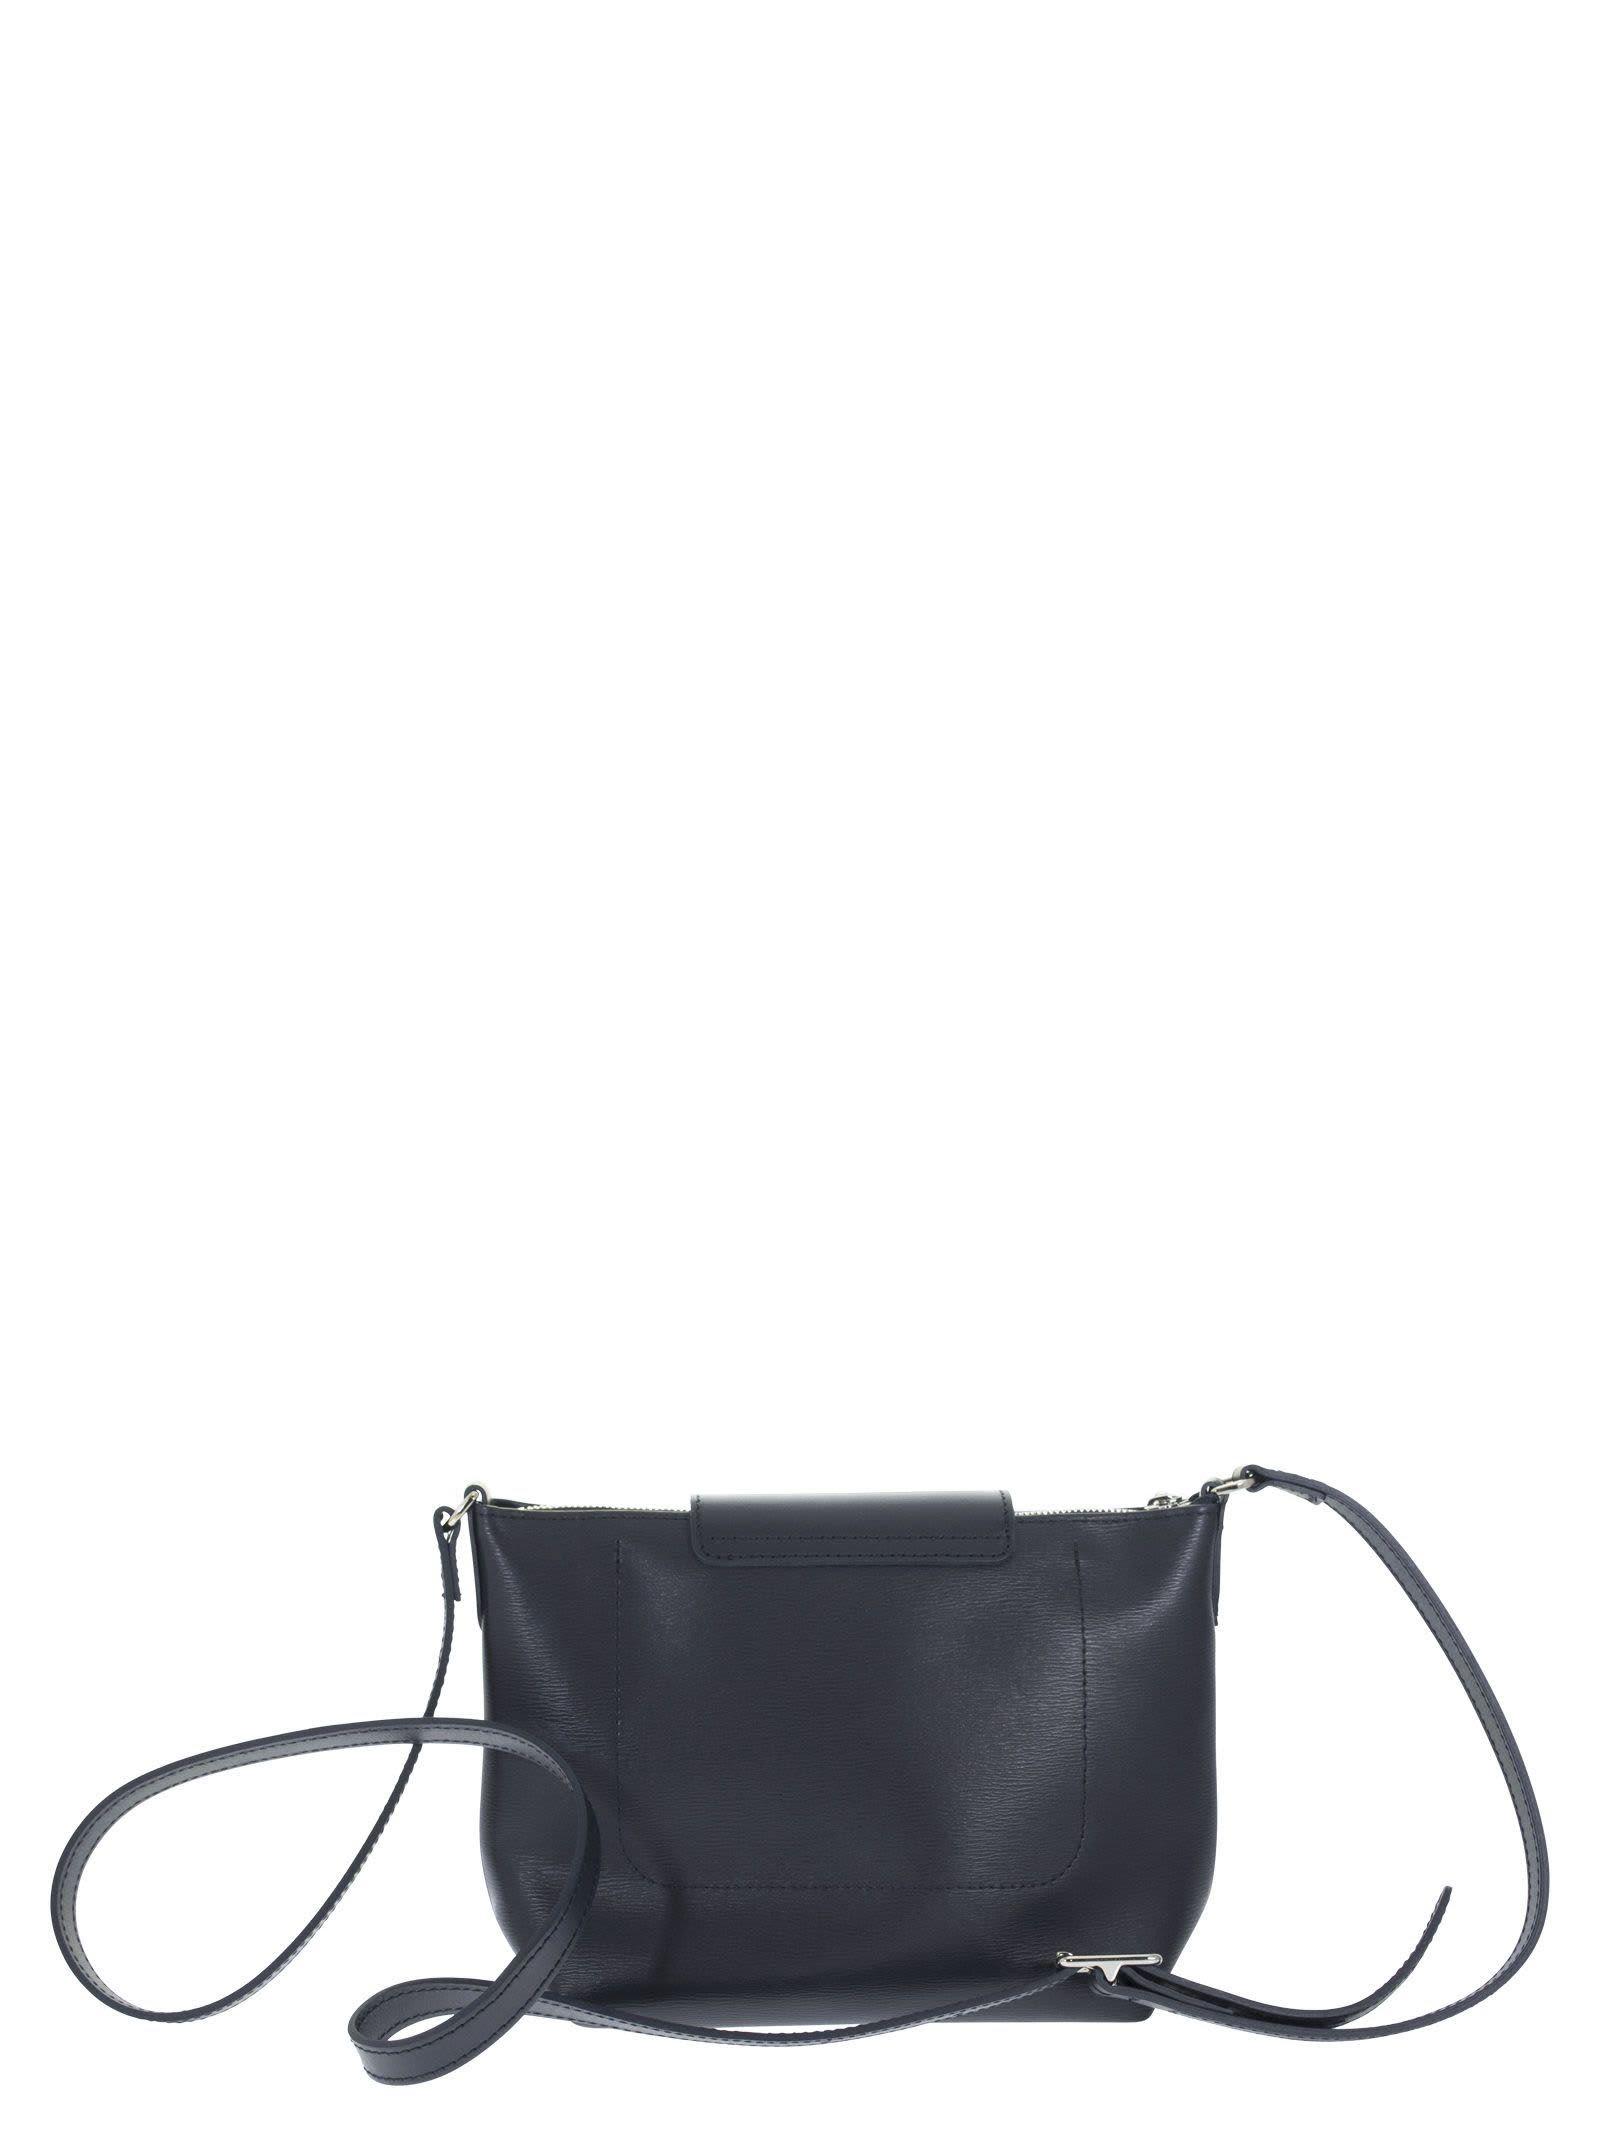 Longchamp Le Pliage City Crossbody Bag In Noir